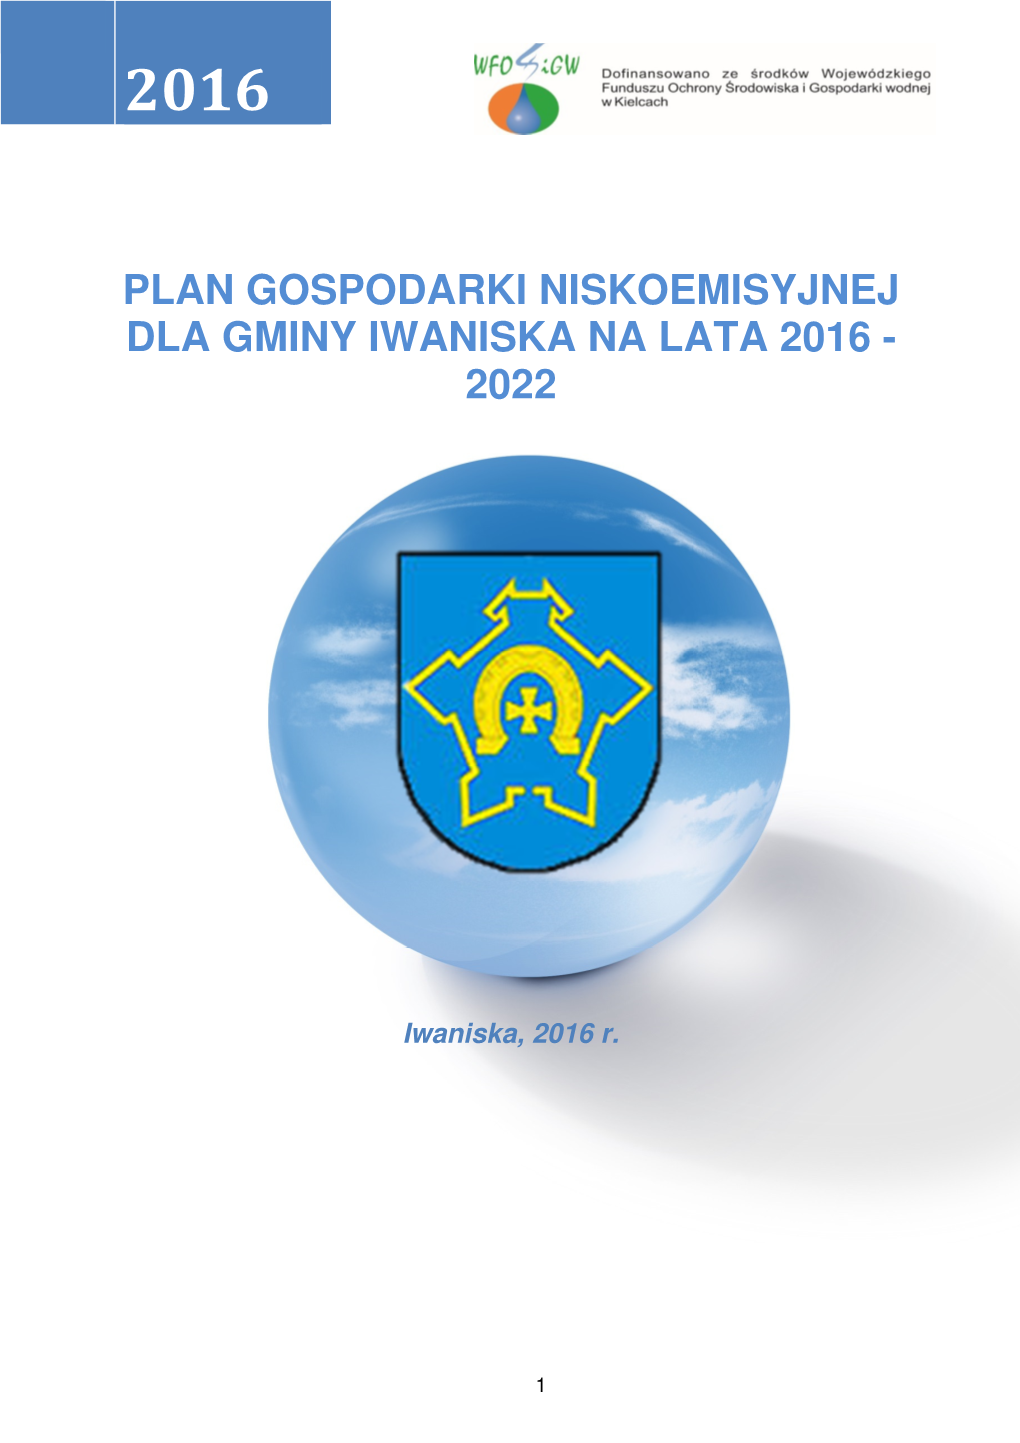 Plan Gospodarki Niskoemisyjnej Dla Gminy Iwaniska Na Lata 2016 - 2022